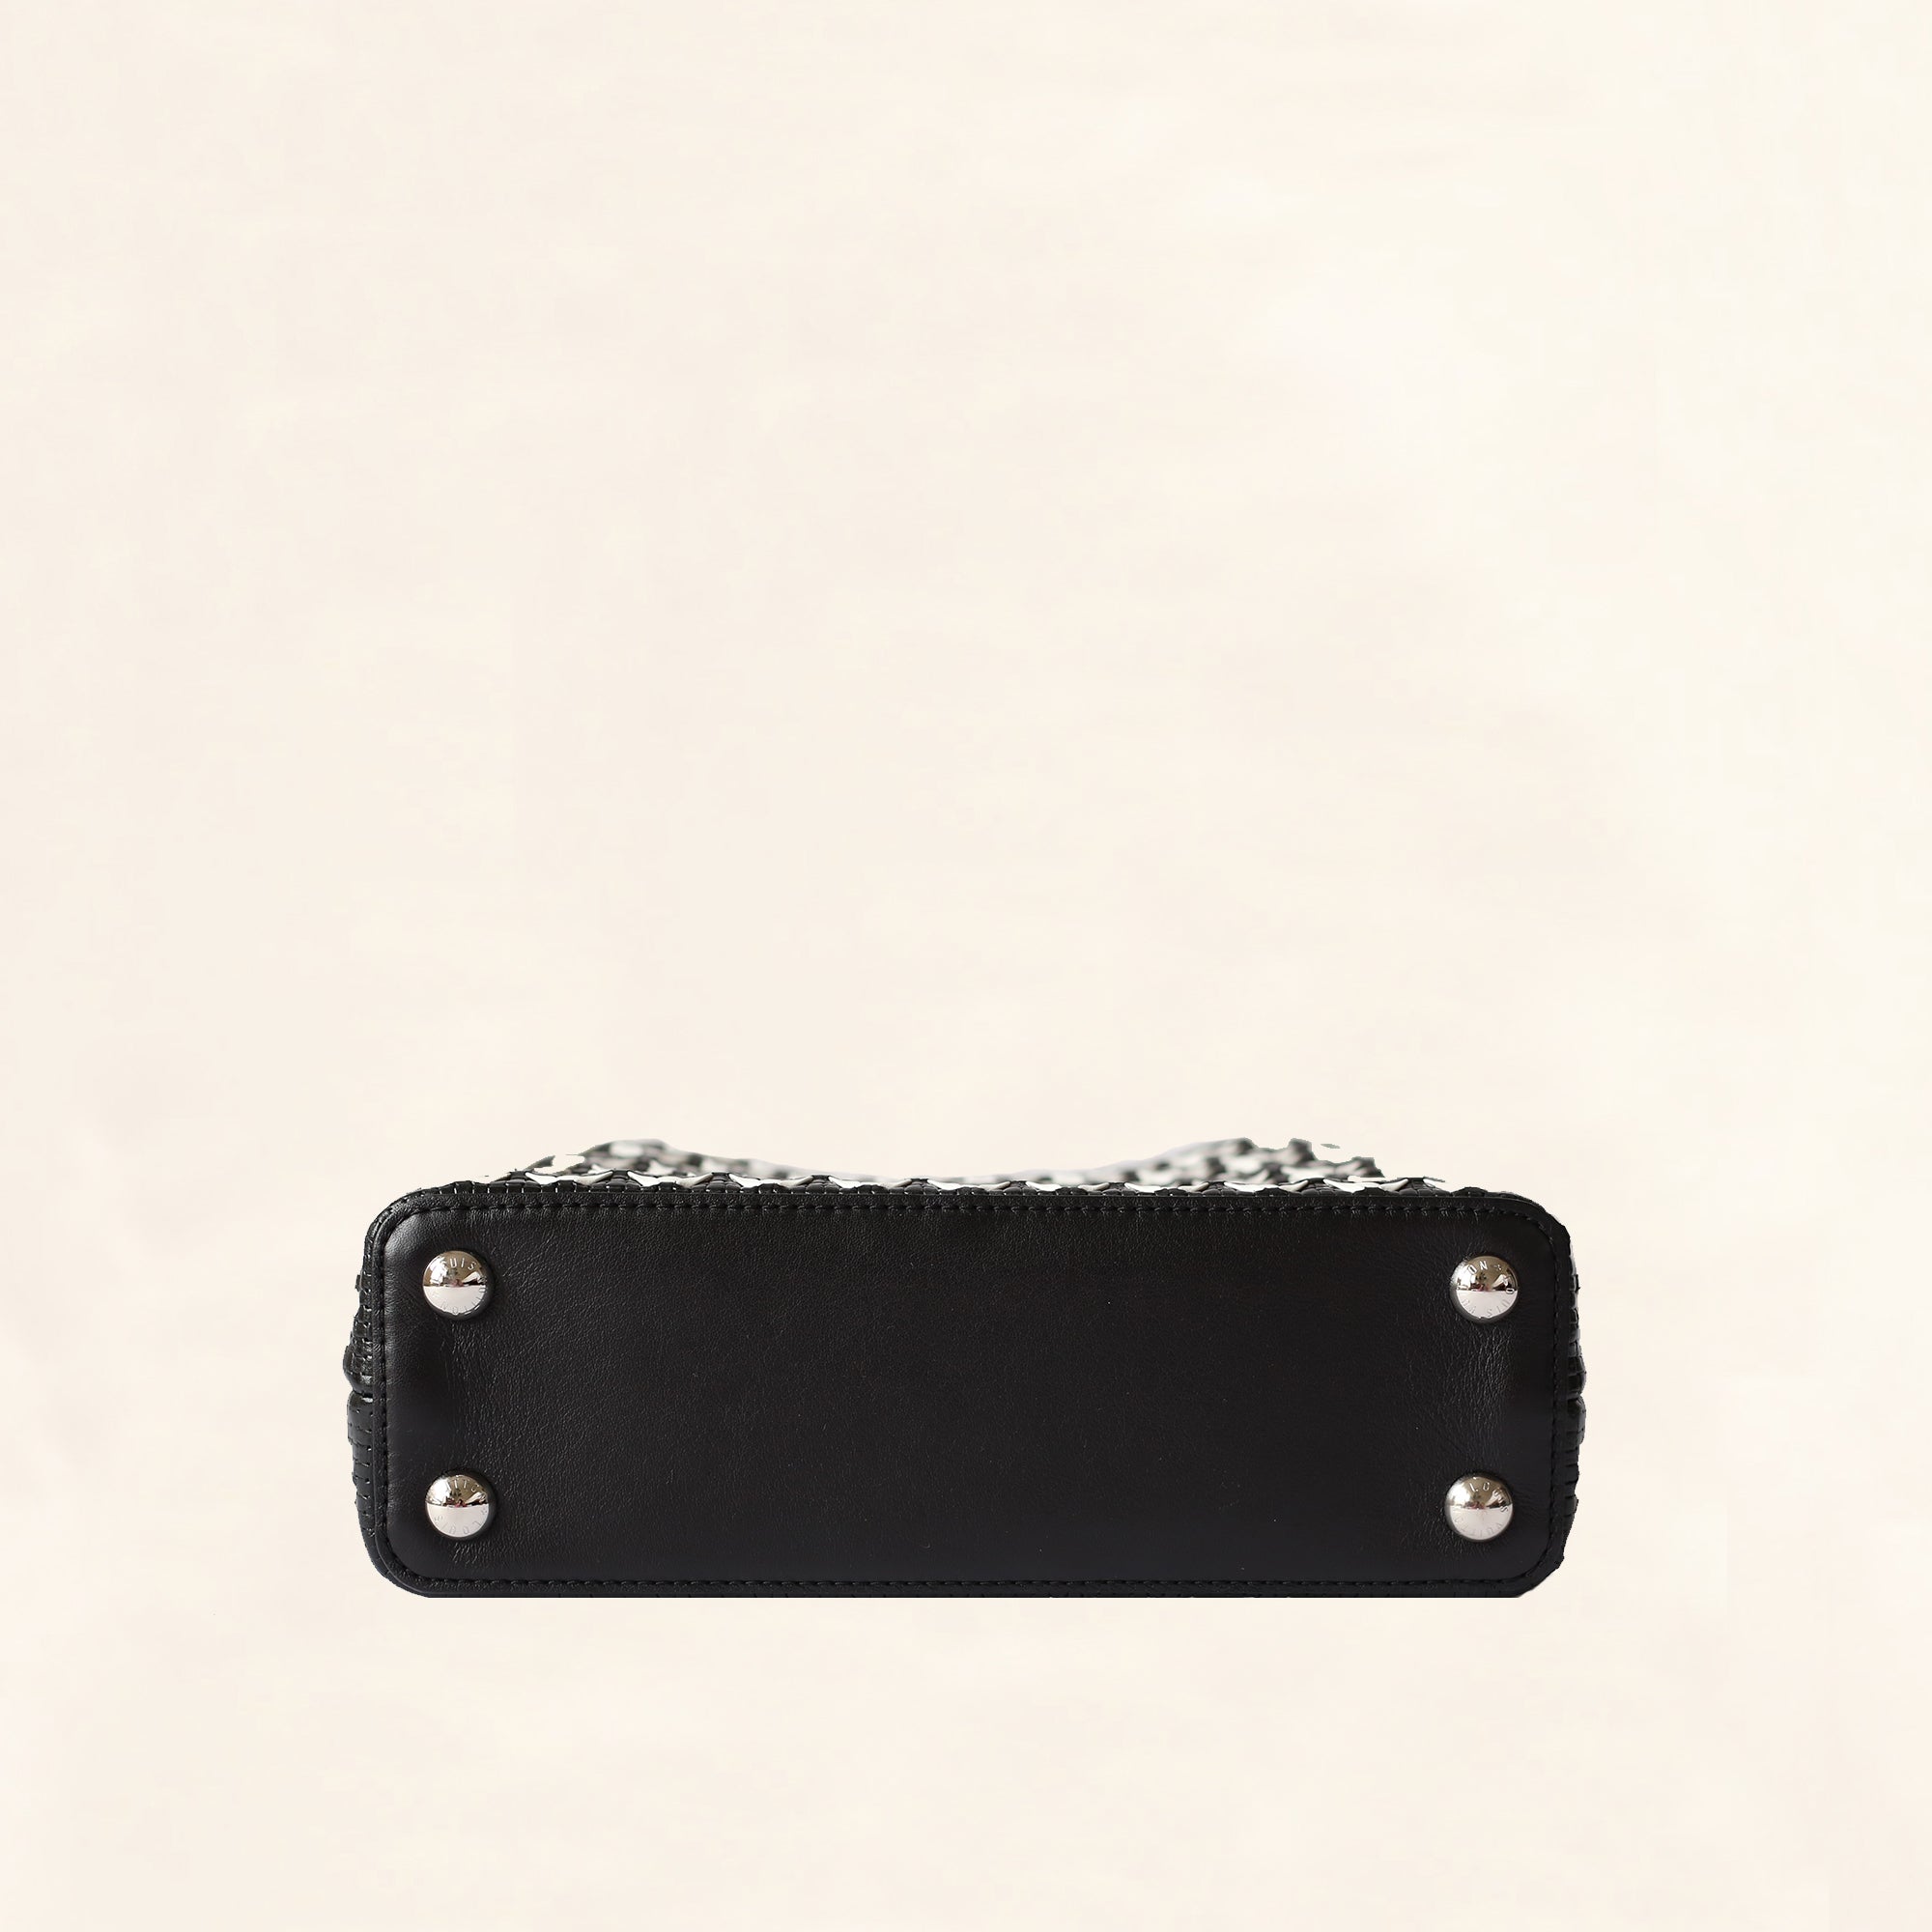 Capucines leather handbag Louis Vuitton Black in Leather - 35979993